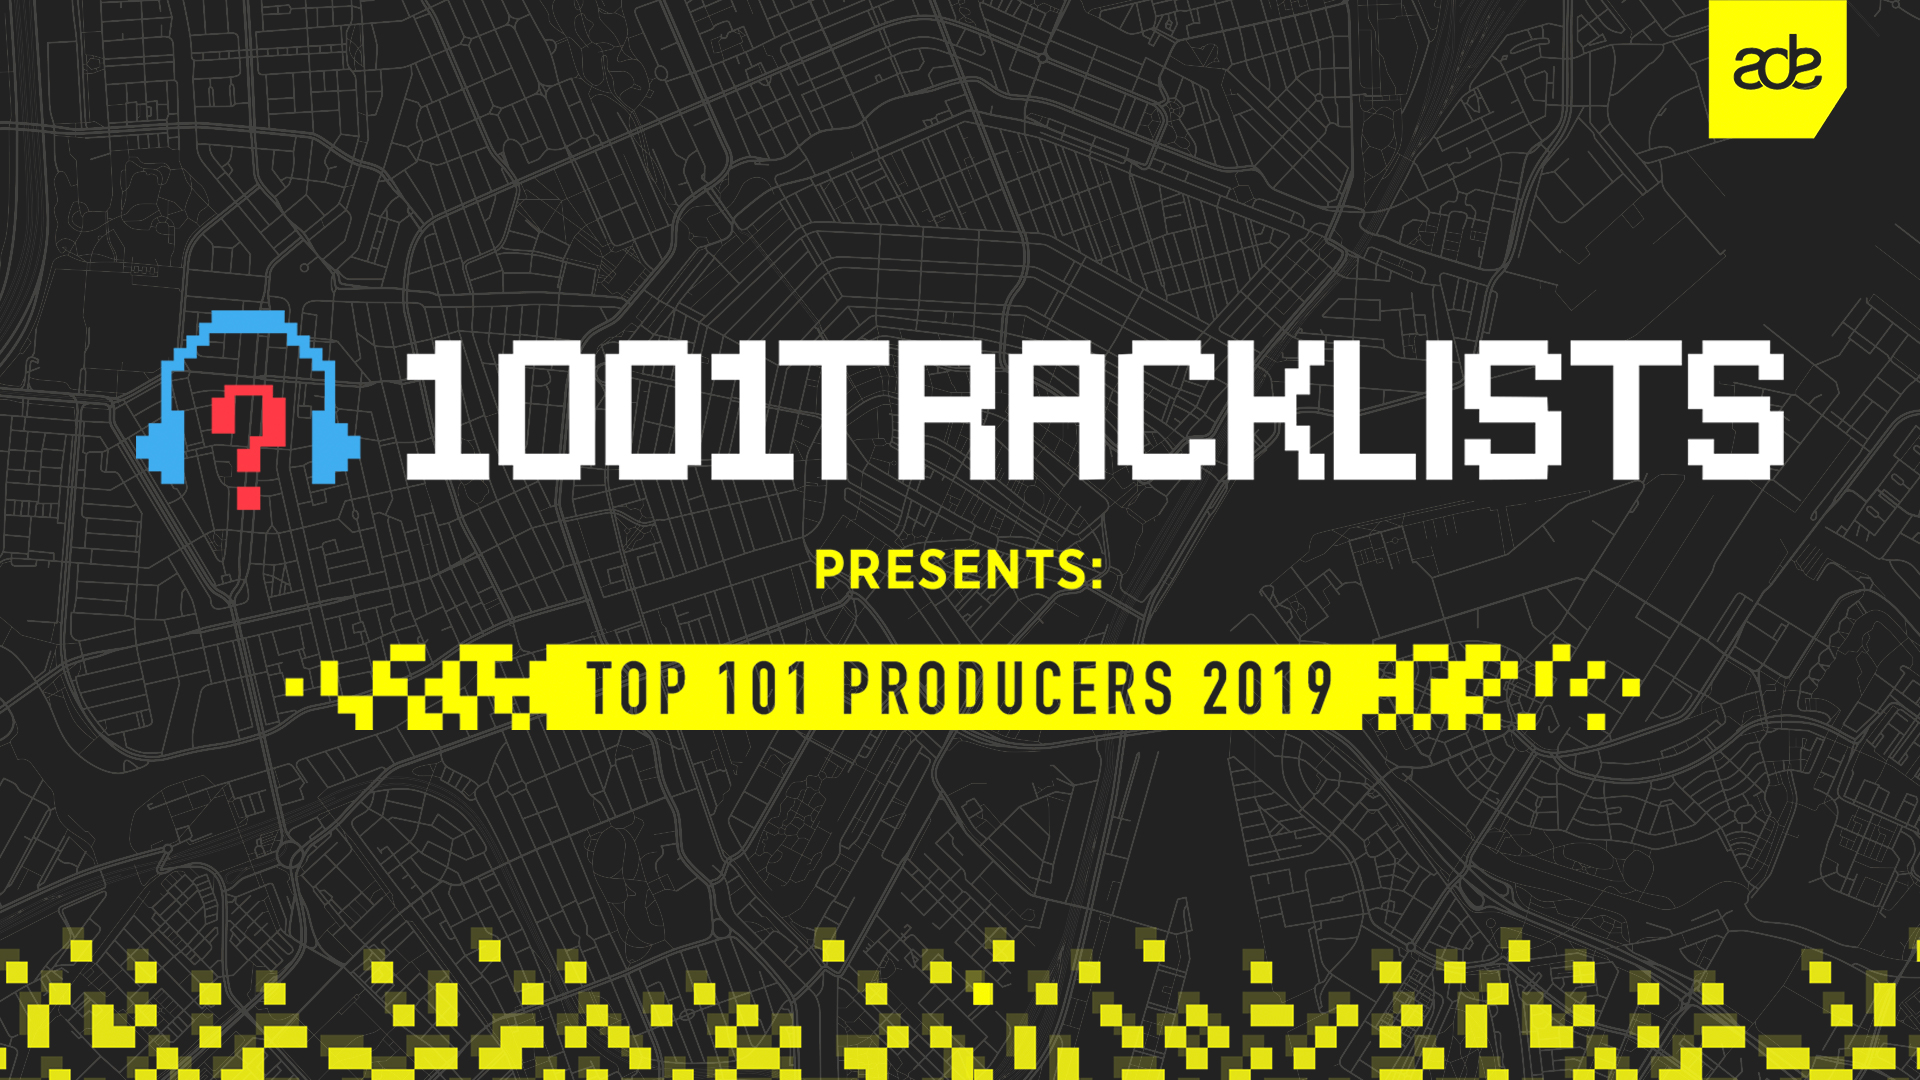 1001Tracklists presents: Top 101 Producers Award